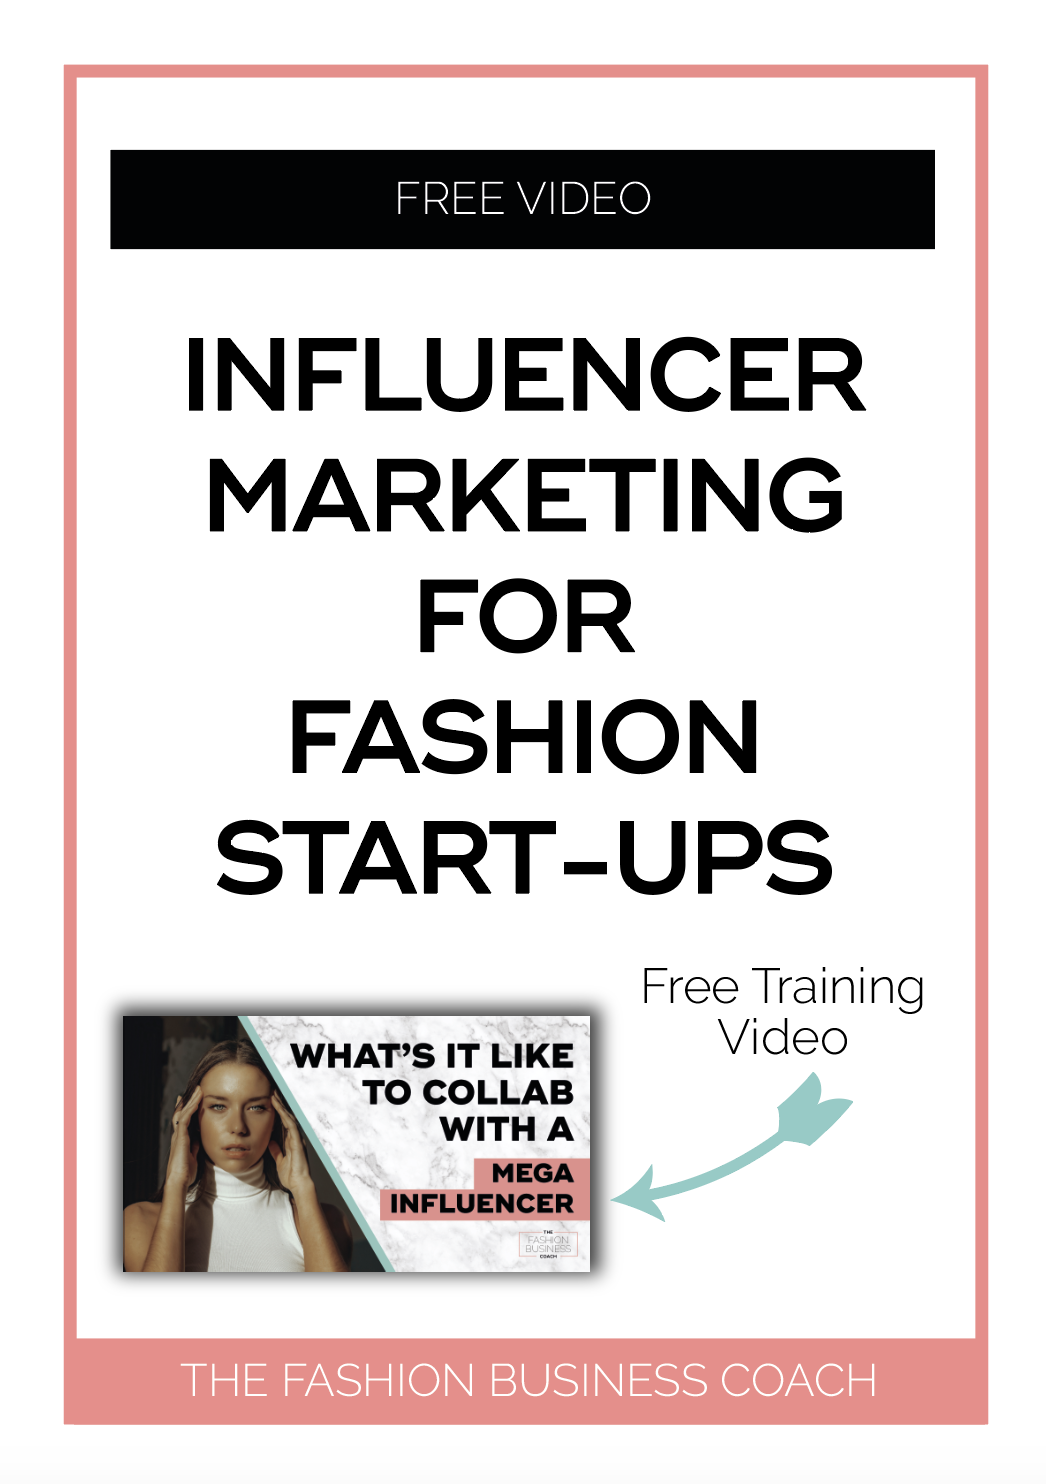 Influencer Marketing for Fashion Start-Ups 3.png